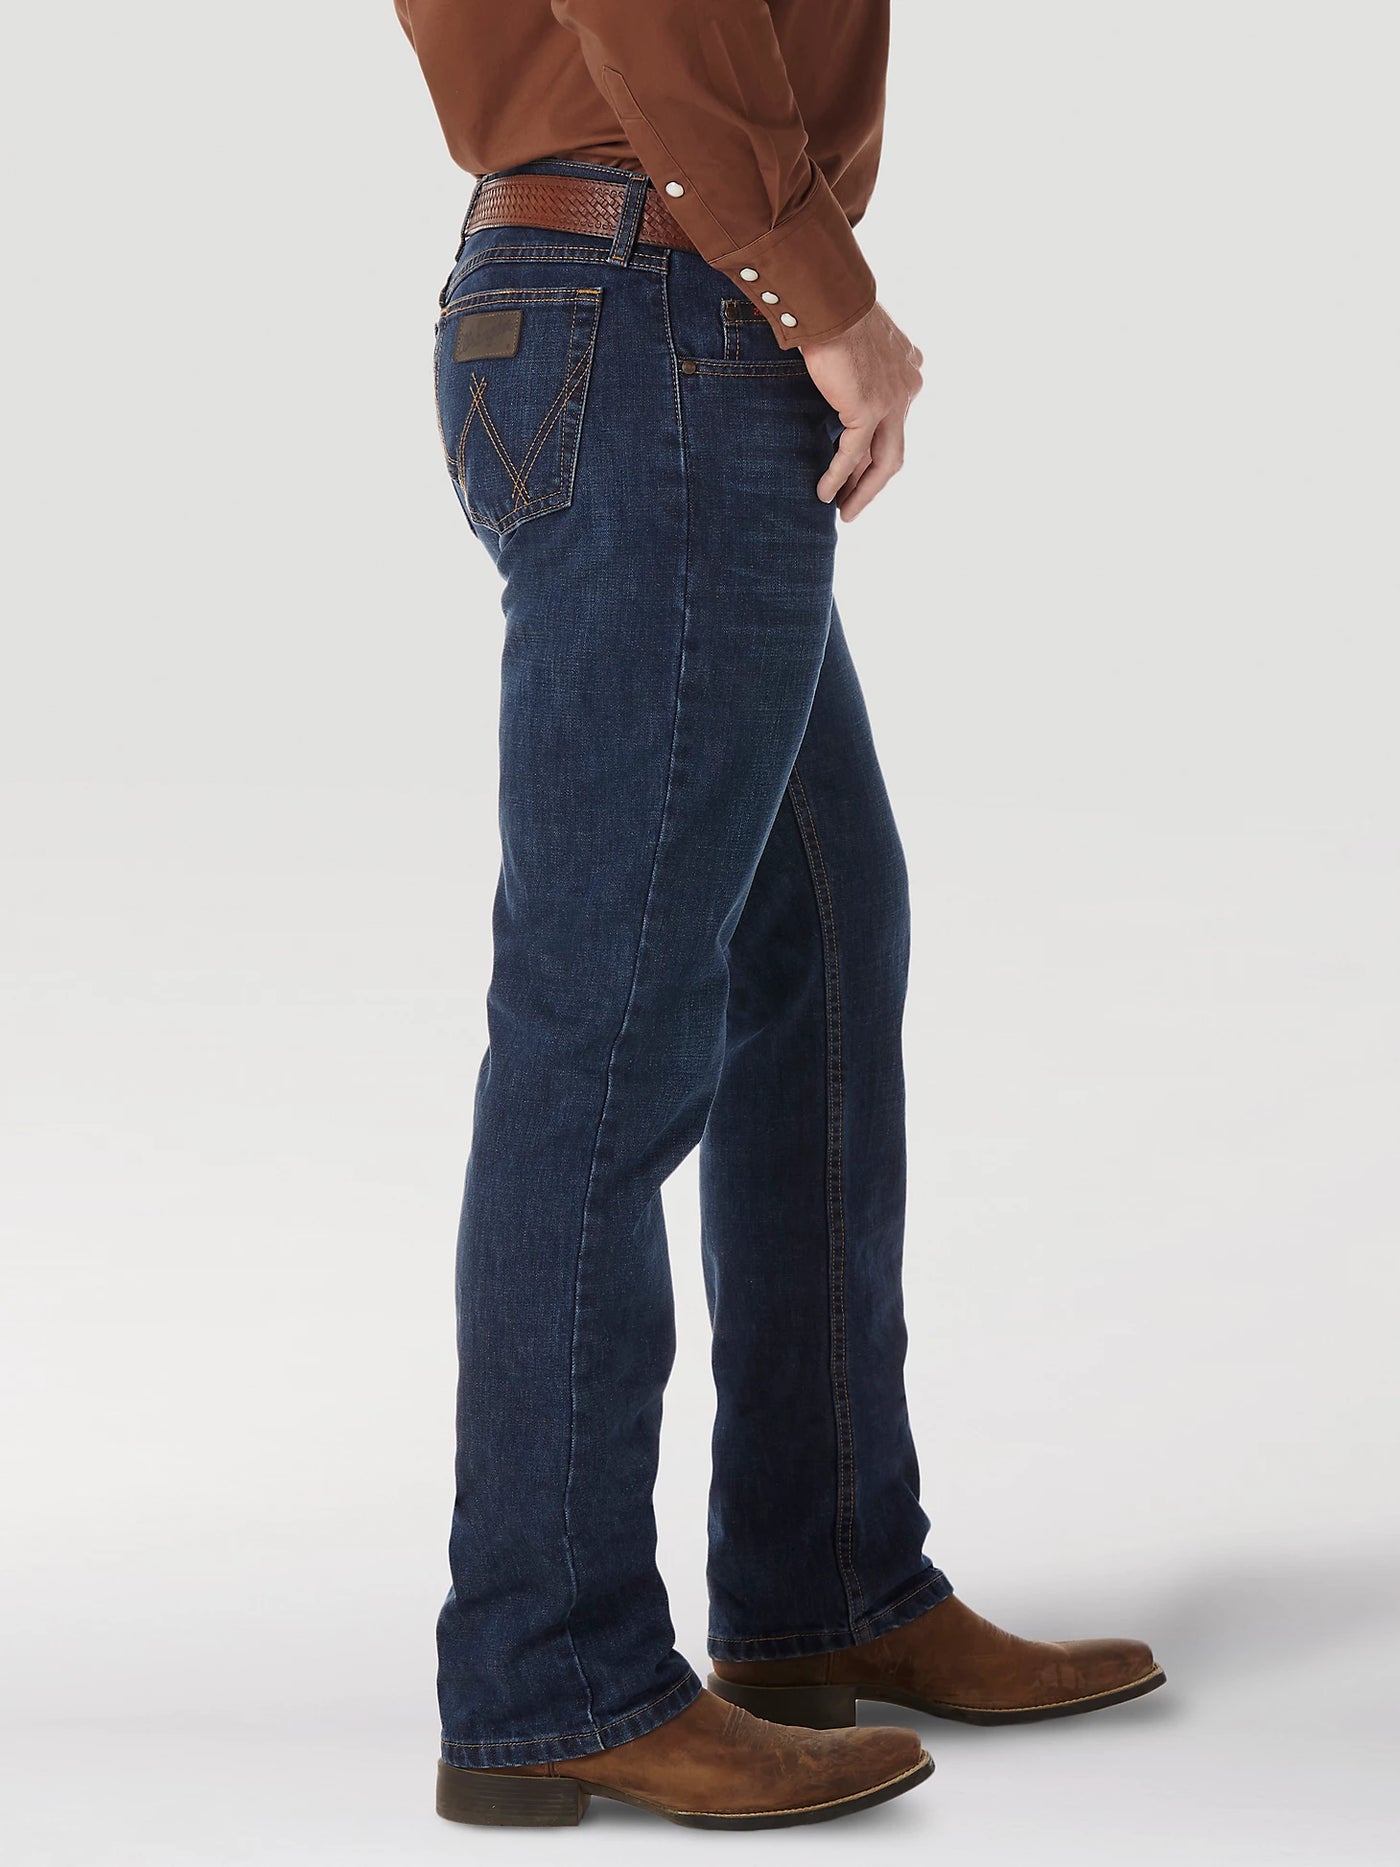 Wrangler Men's 20X 02 Competition Slim Jeans-Dillon